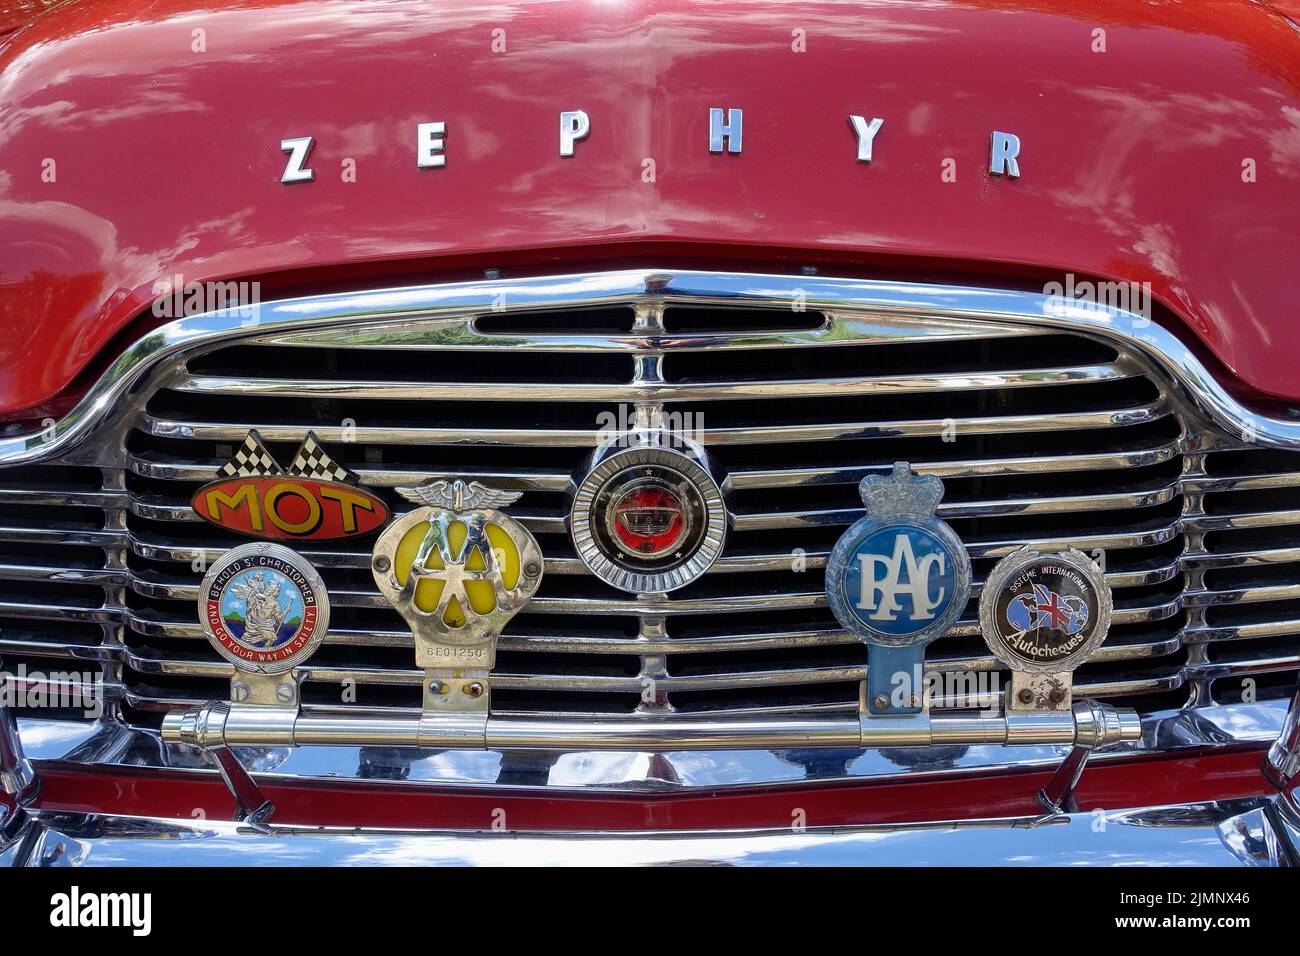 Ford Zephyr, Insignia, Logotipo, Sobremarcha, Insignia AA, Insignia RAC, Insignia, Coche clásico Foto de stock